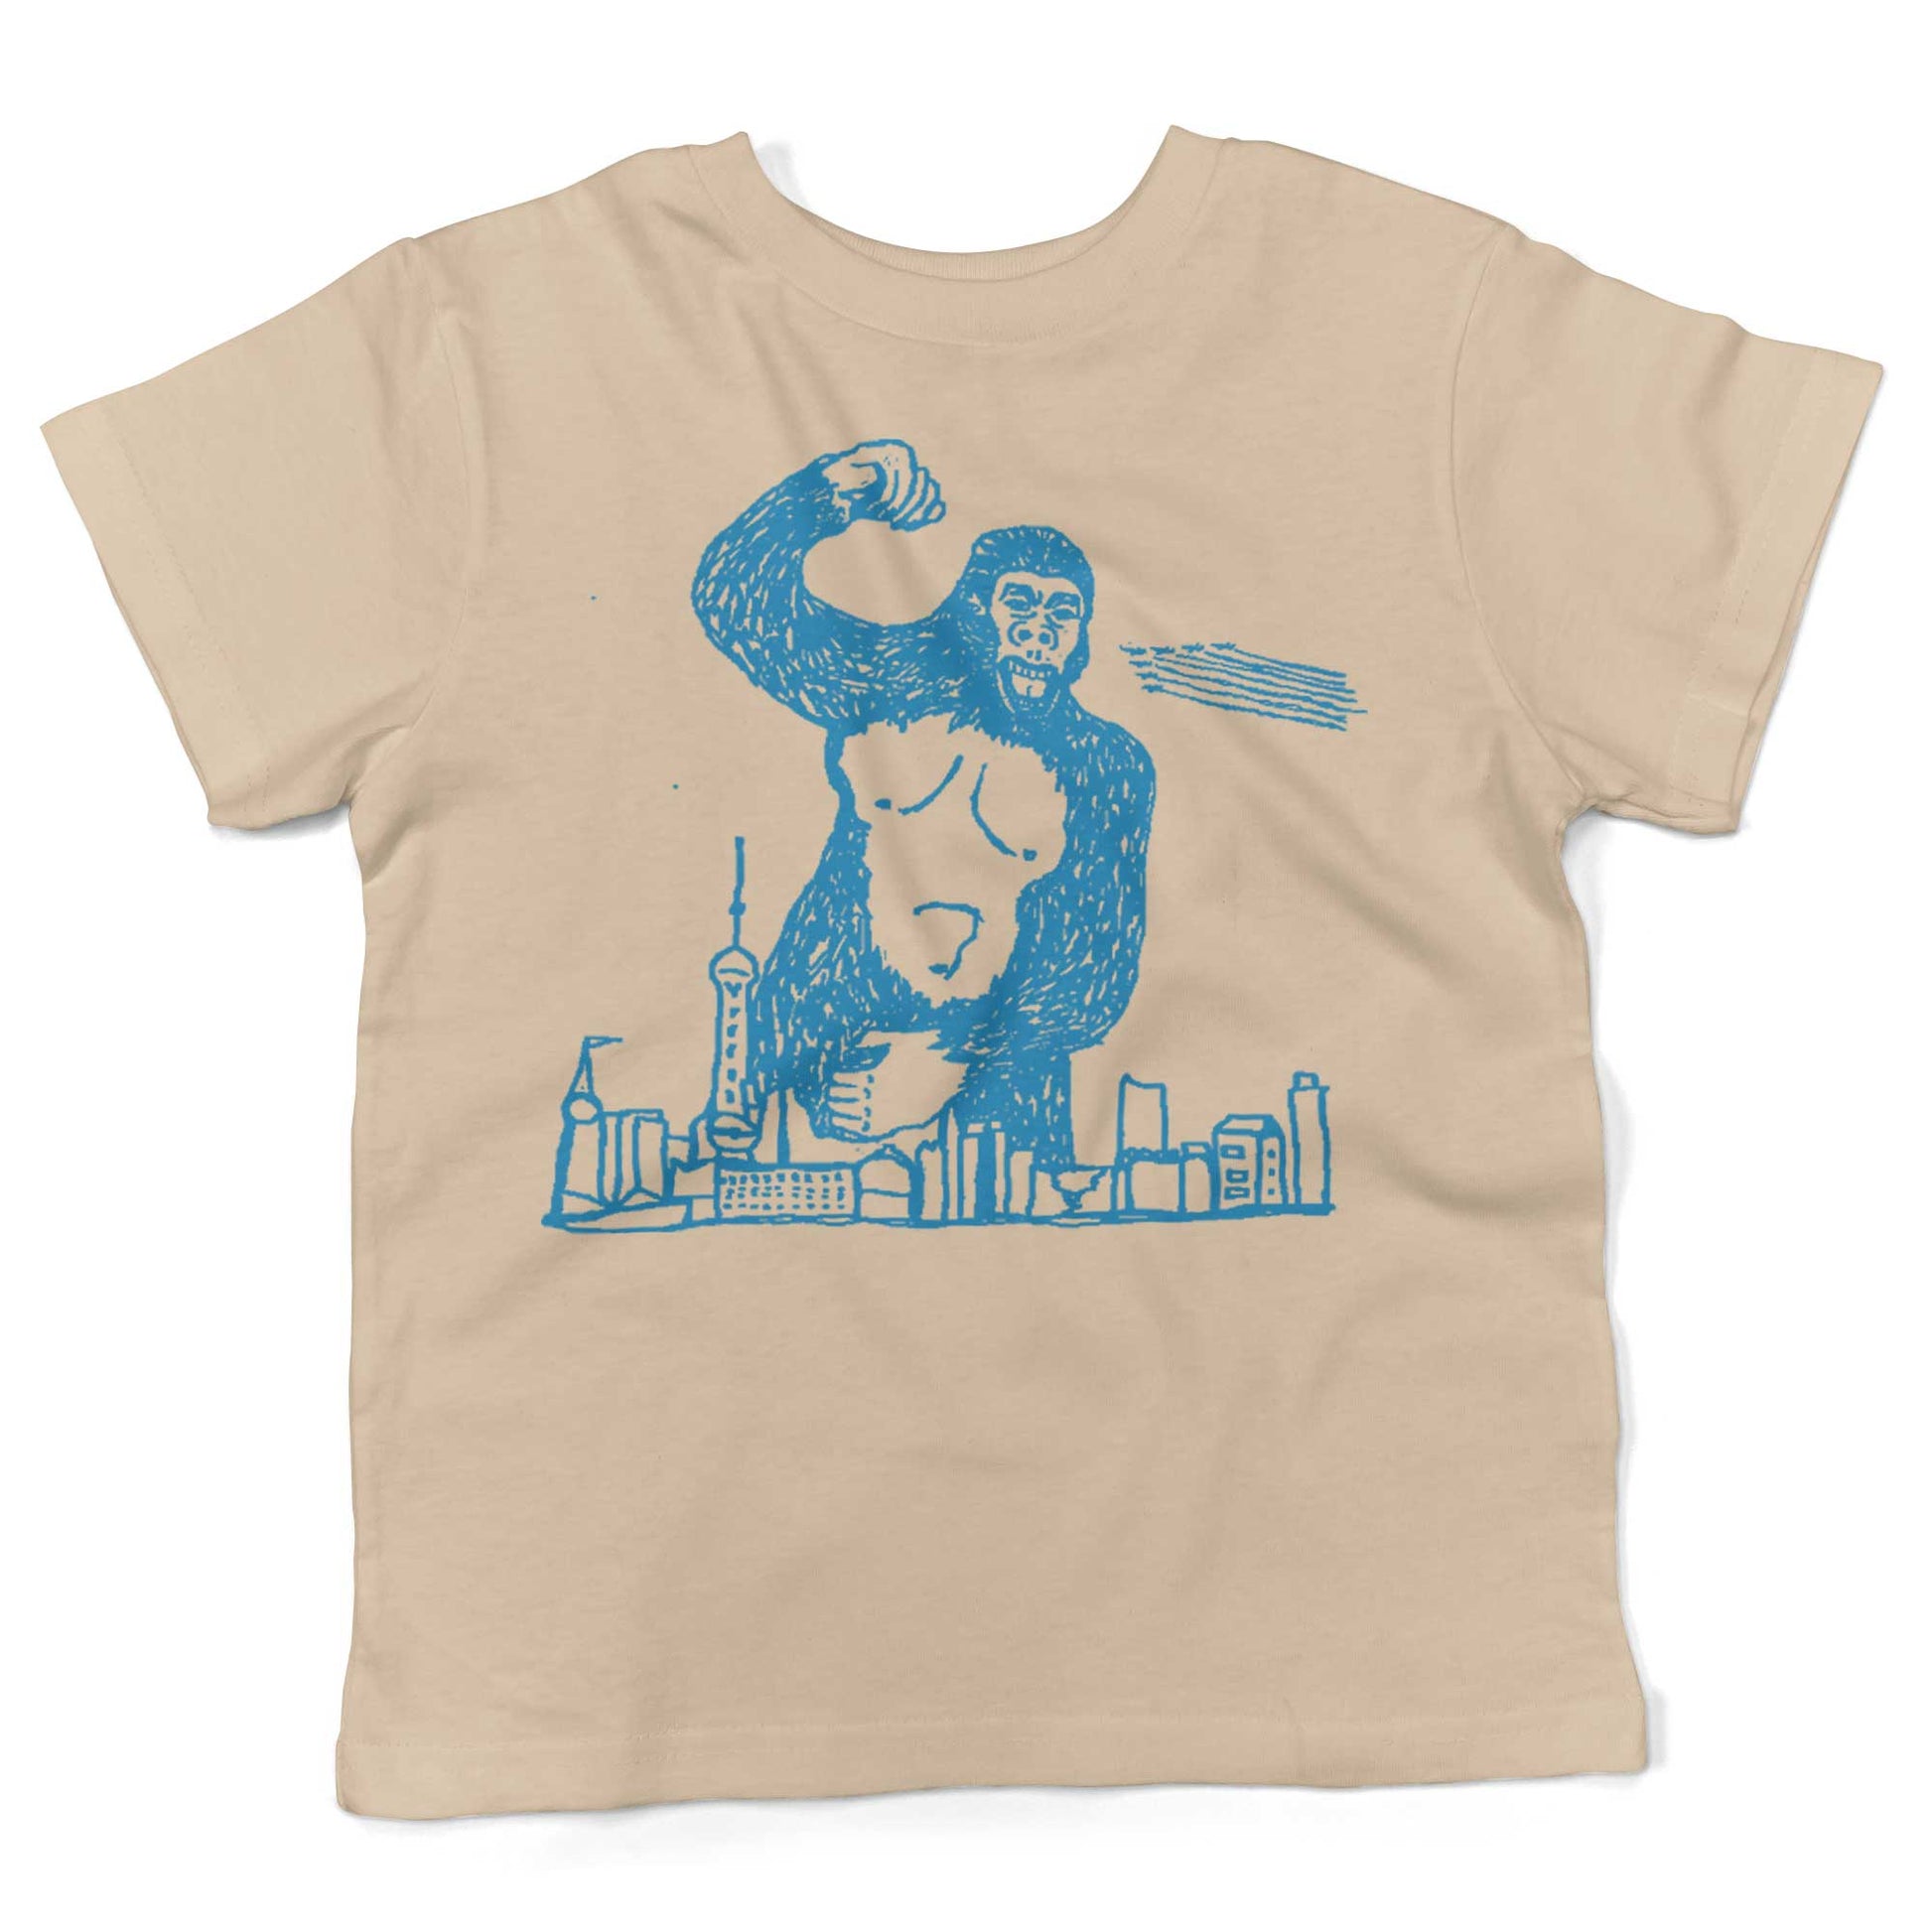 Giant Gorilla Drawing Toddler Shirt-Organic Natural-2T